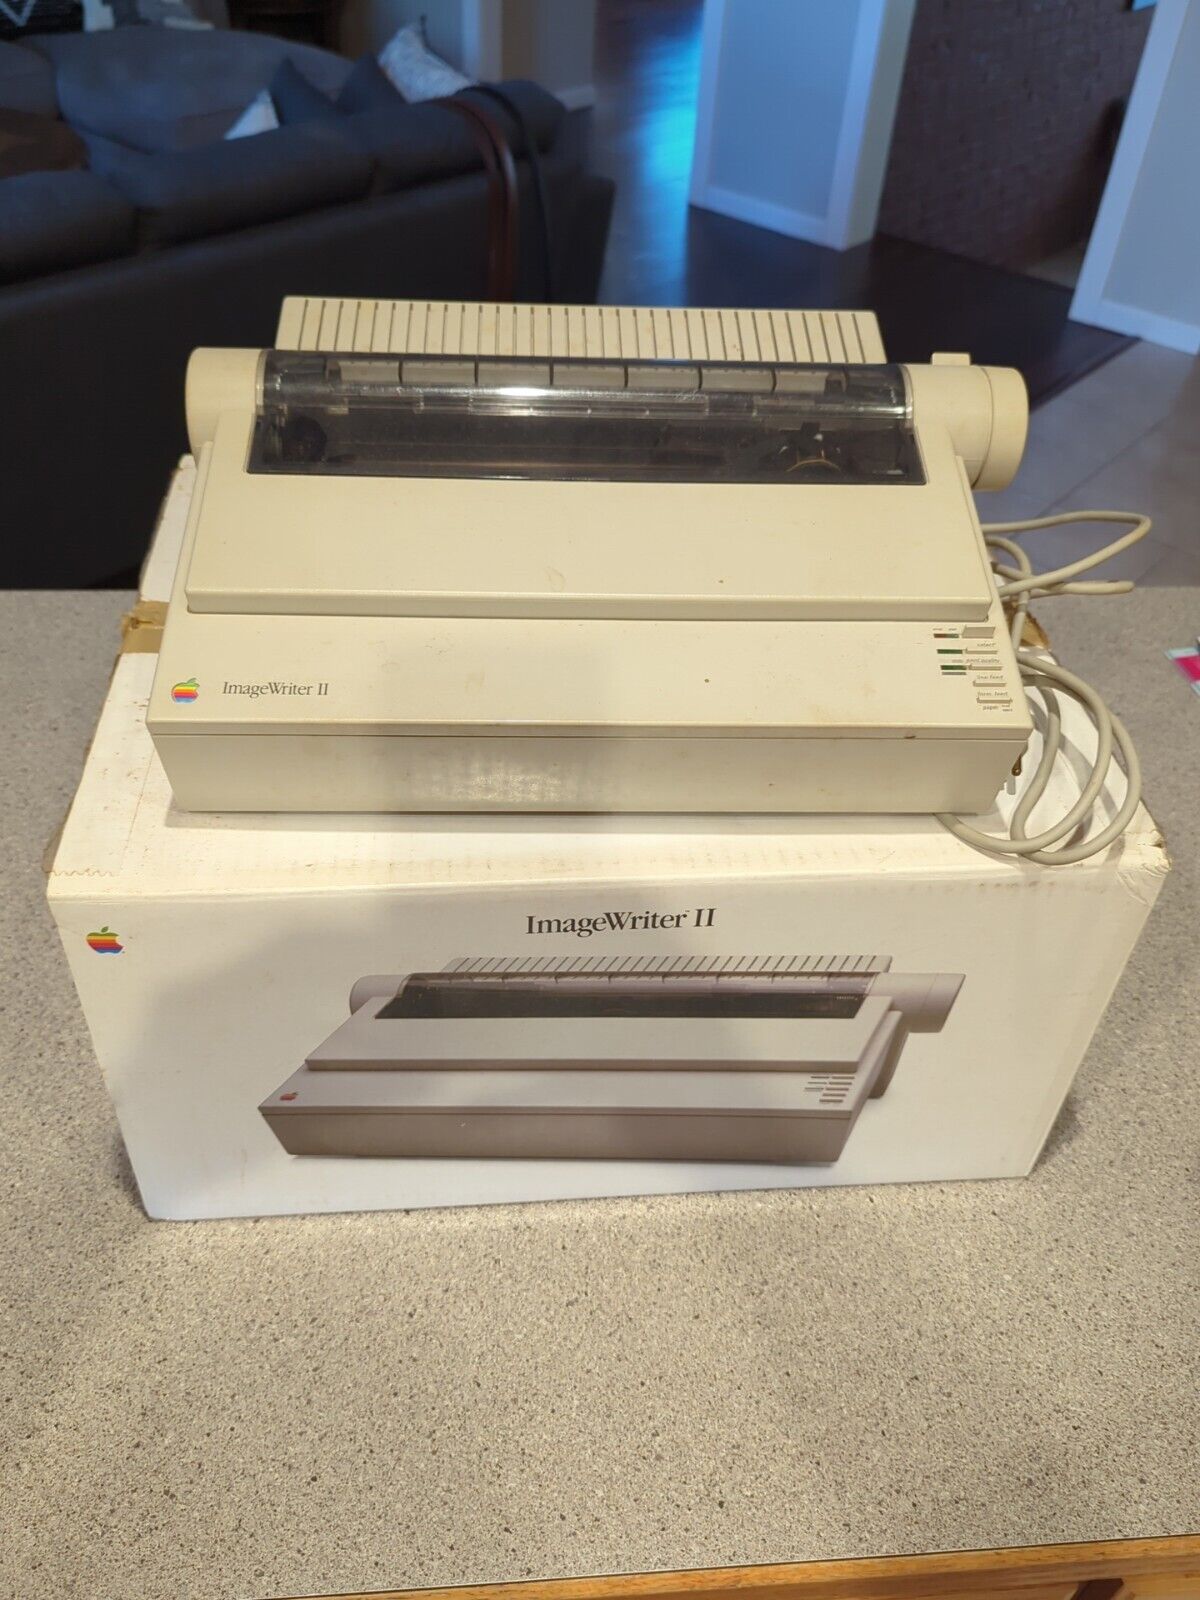 Vintage Apple Image Writer Printer II A9M0320 With BOX